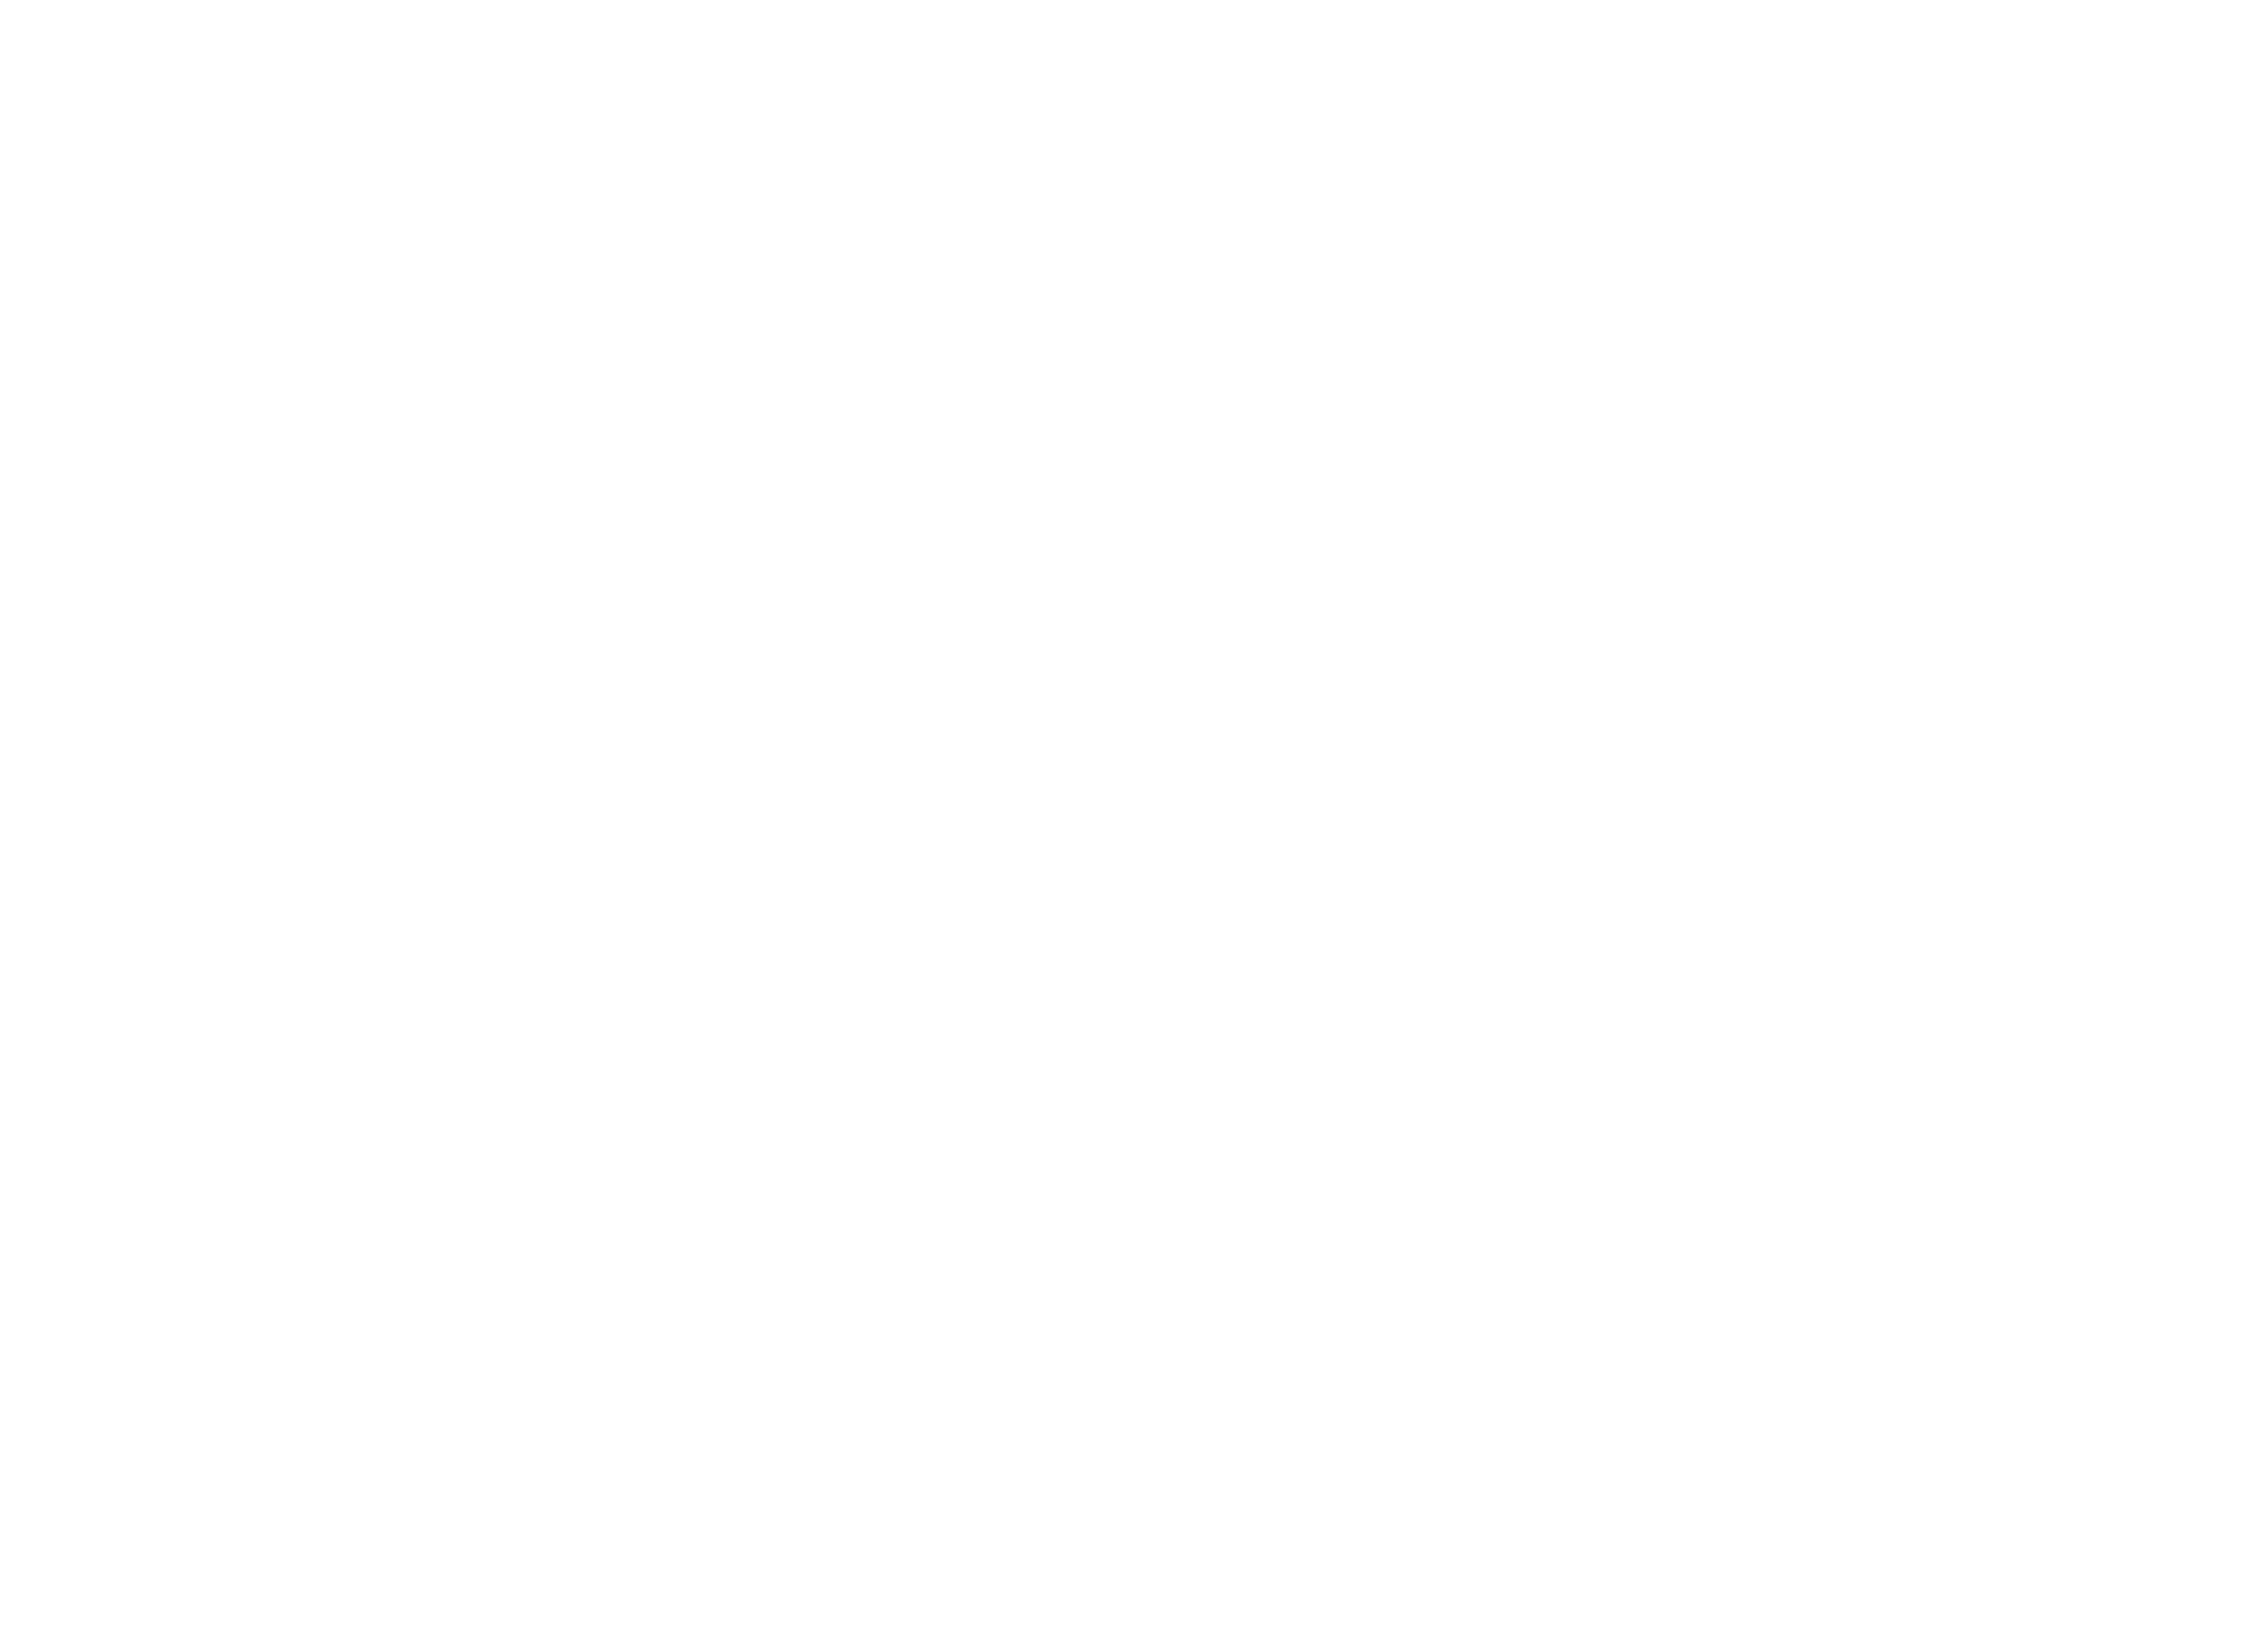 Bistro Henri's menu